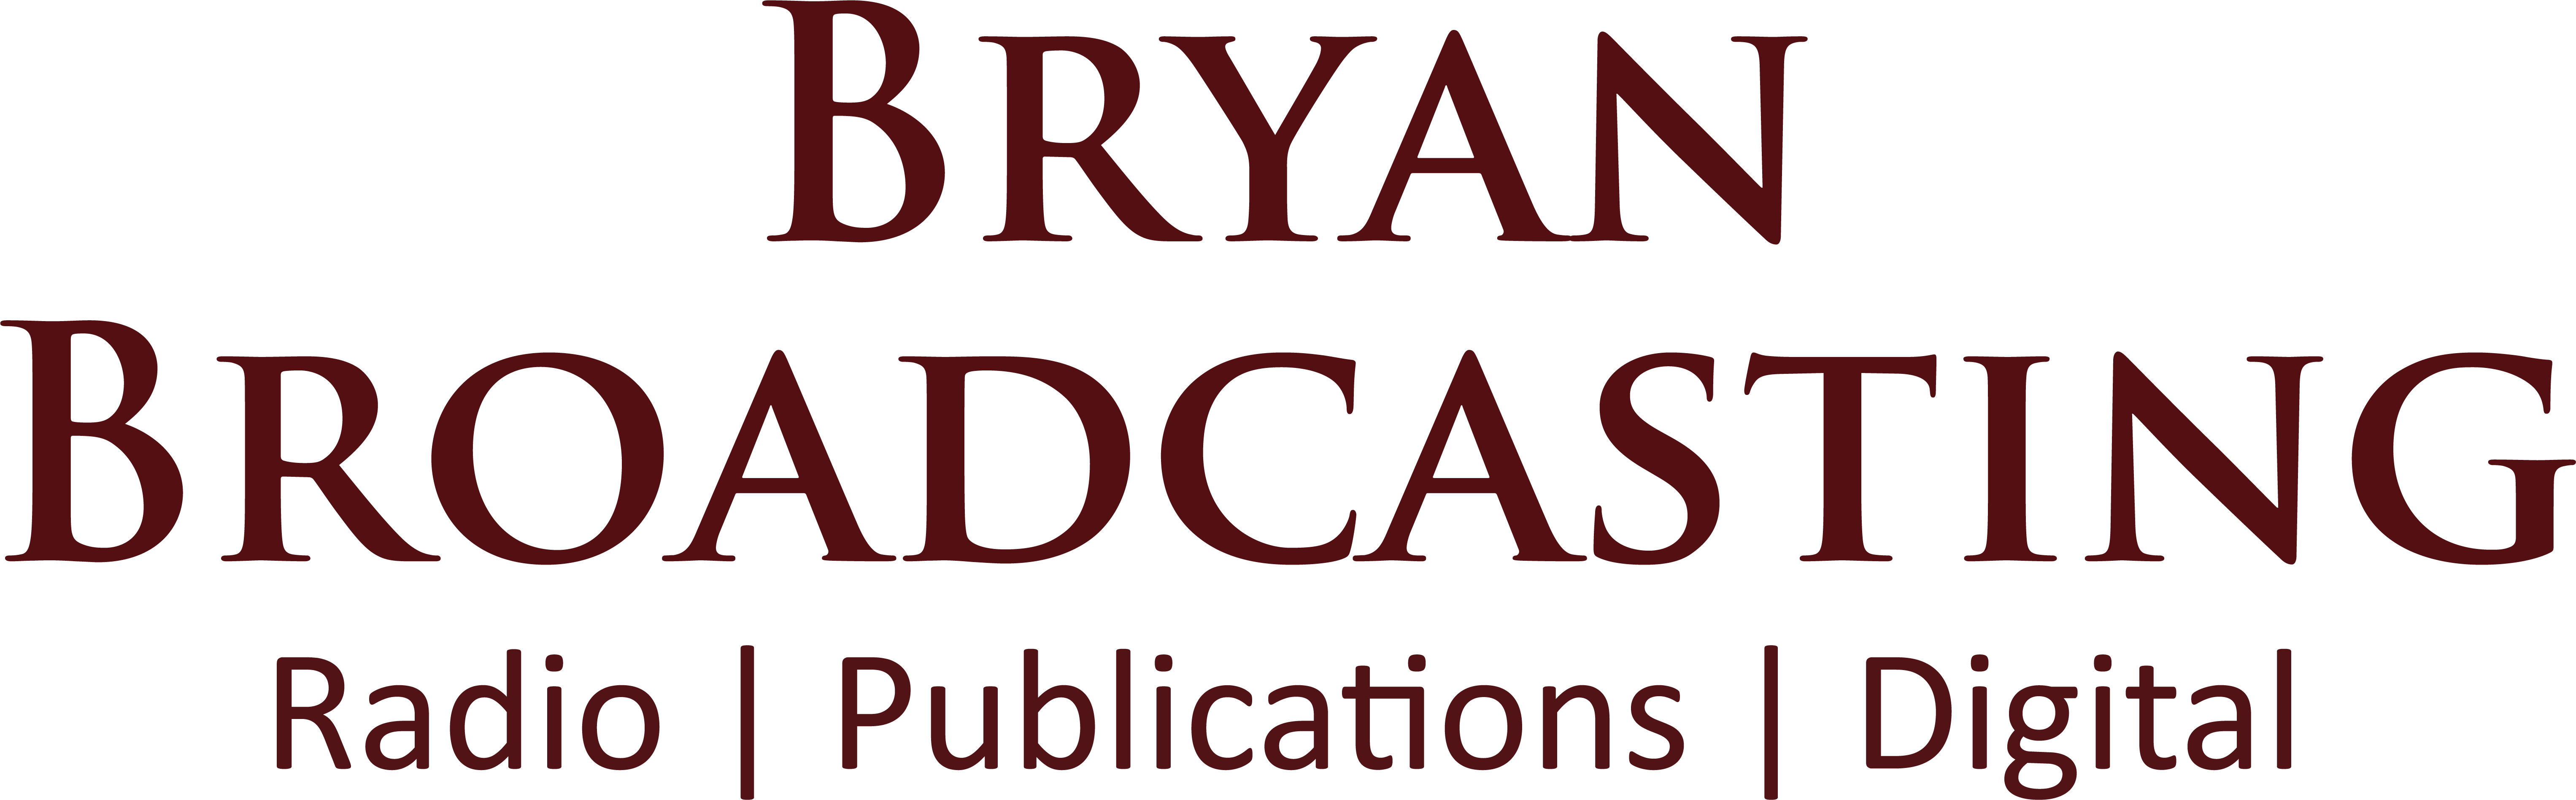 Bryan-Broadcasting-Logo-High-Res-PNG